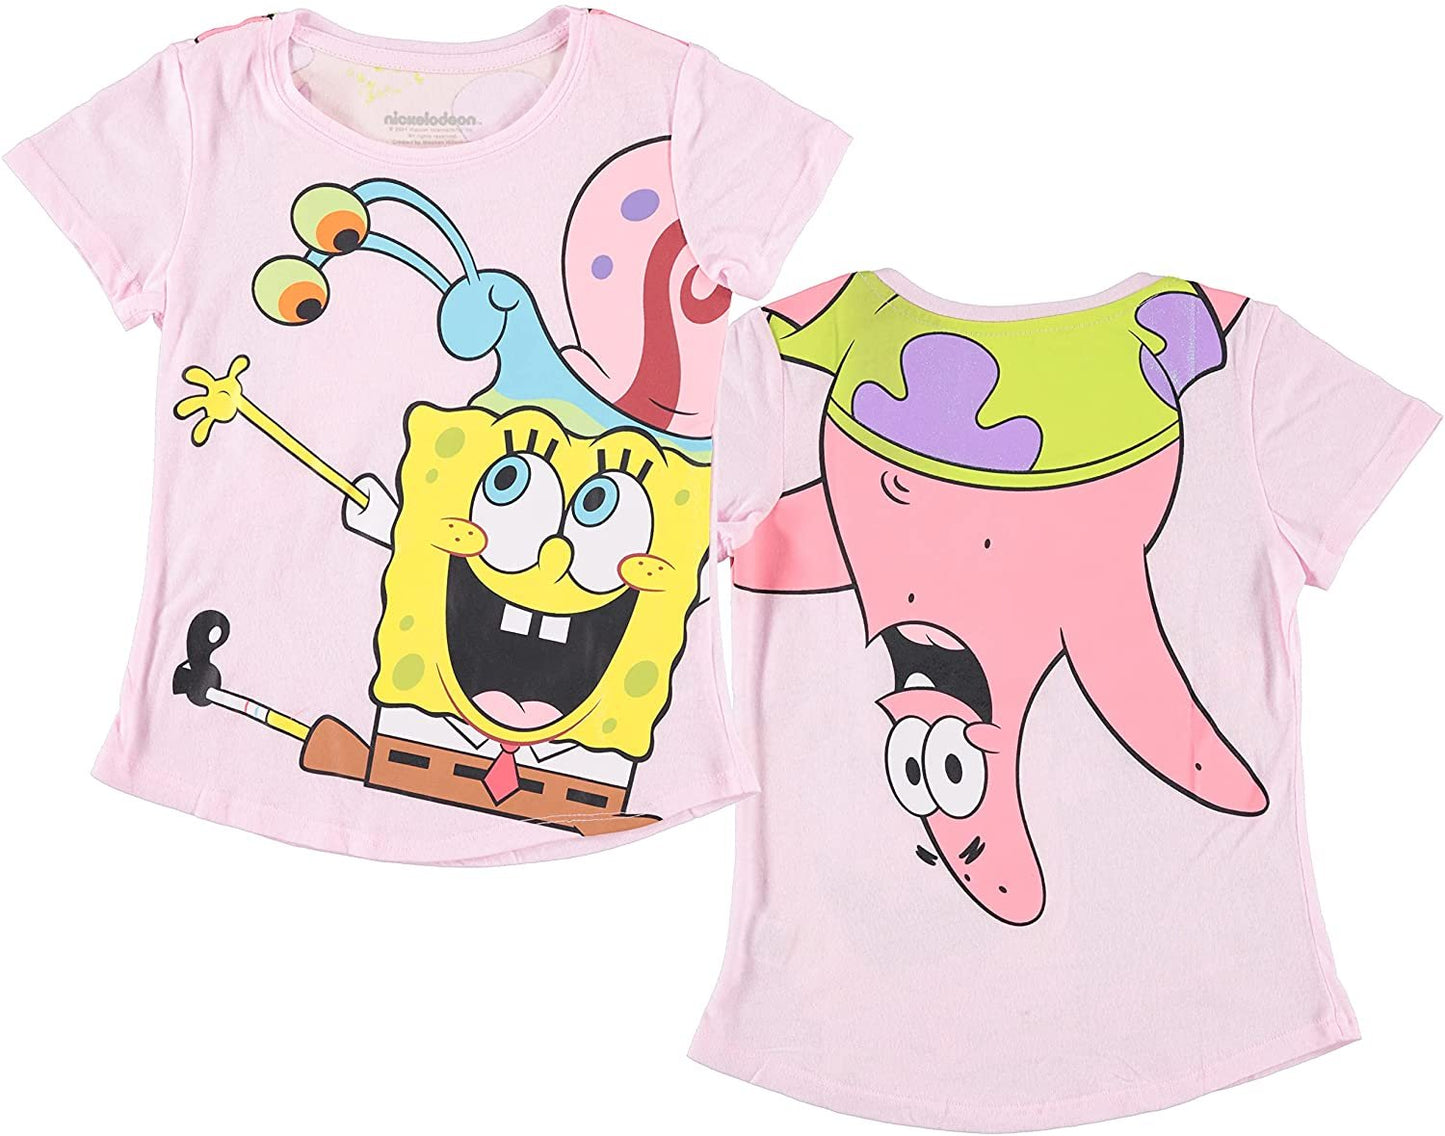 SpongeBob SquarePants Girls T-Shirt - Spongebob & Patrick Front & Back Tee - Sizes 4-16